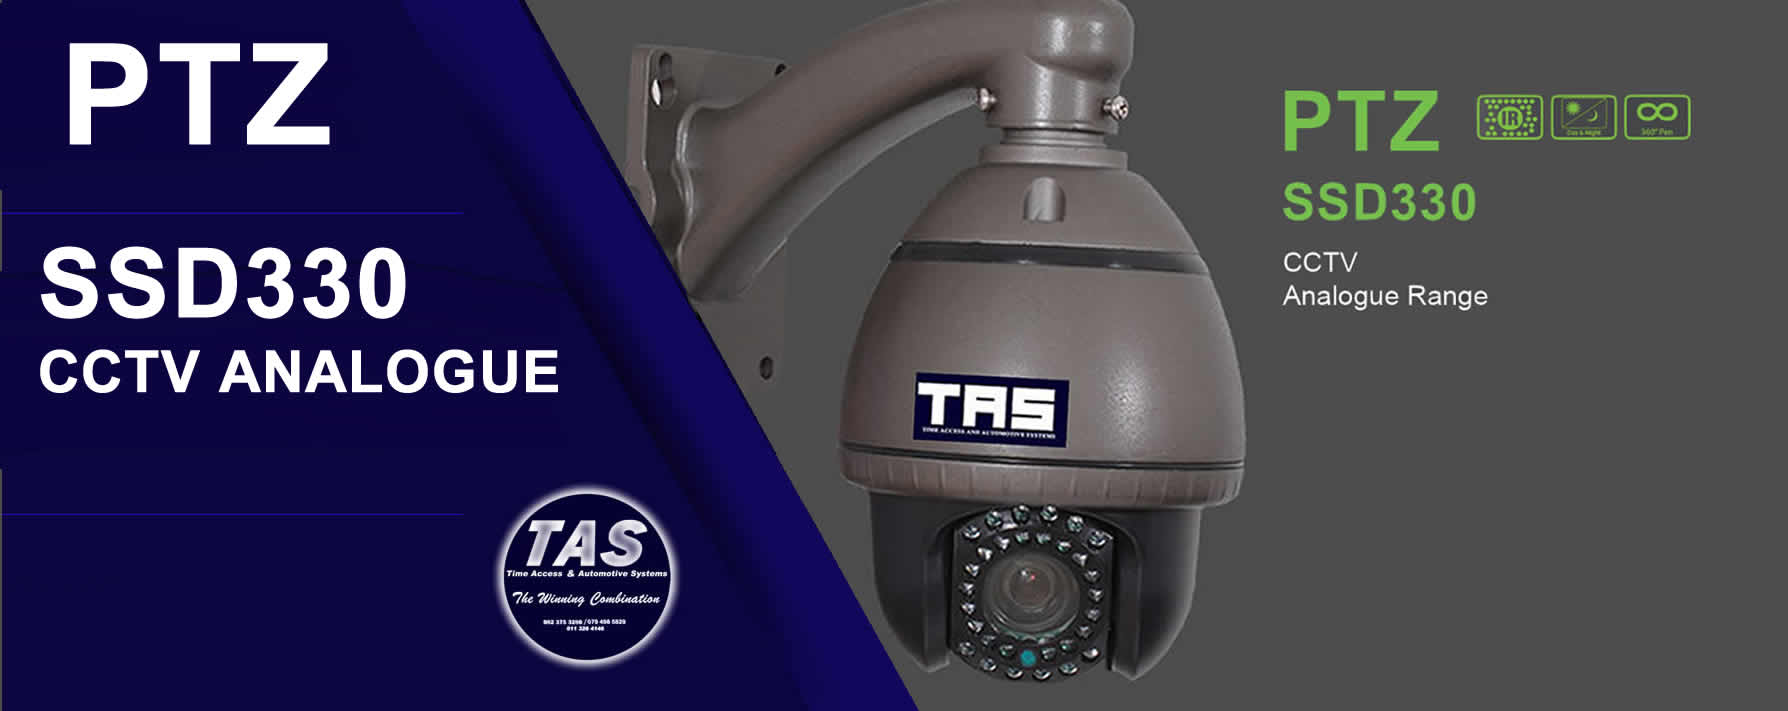 PTZ SSD330 CCTV Cameras Analogue Bullet Range Product - CCTV Cameras security control banner